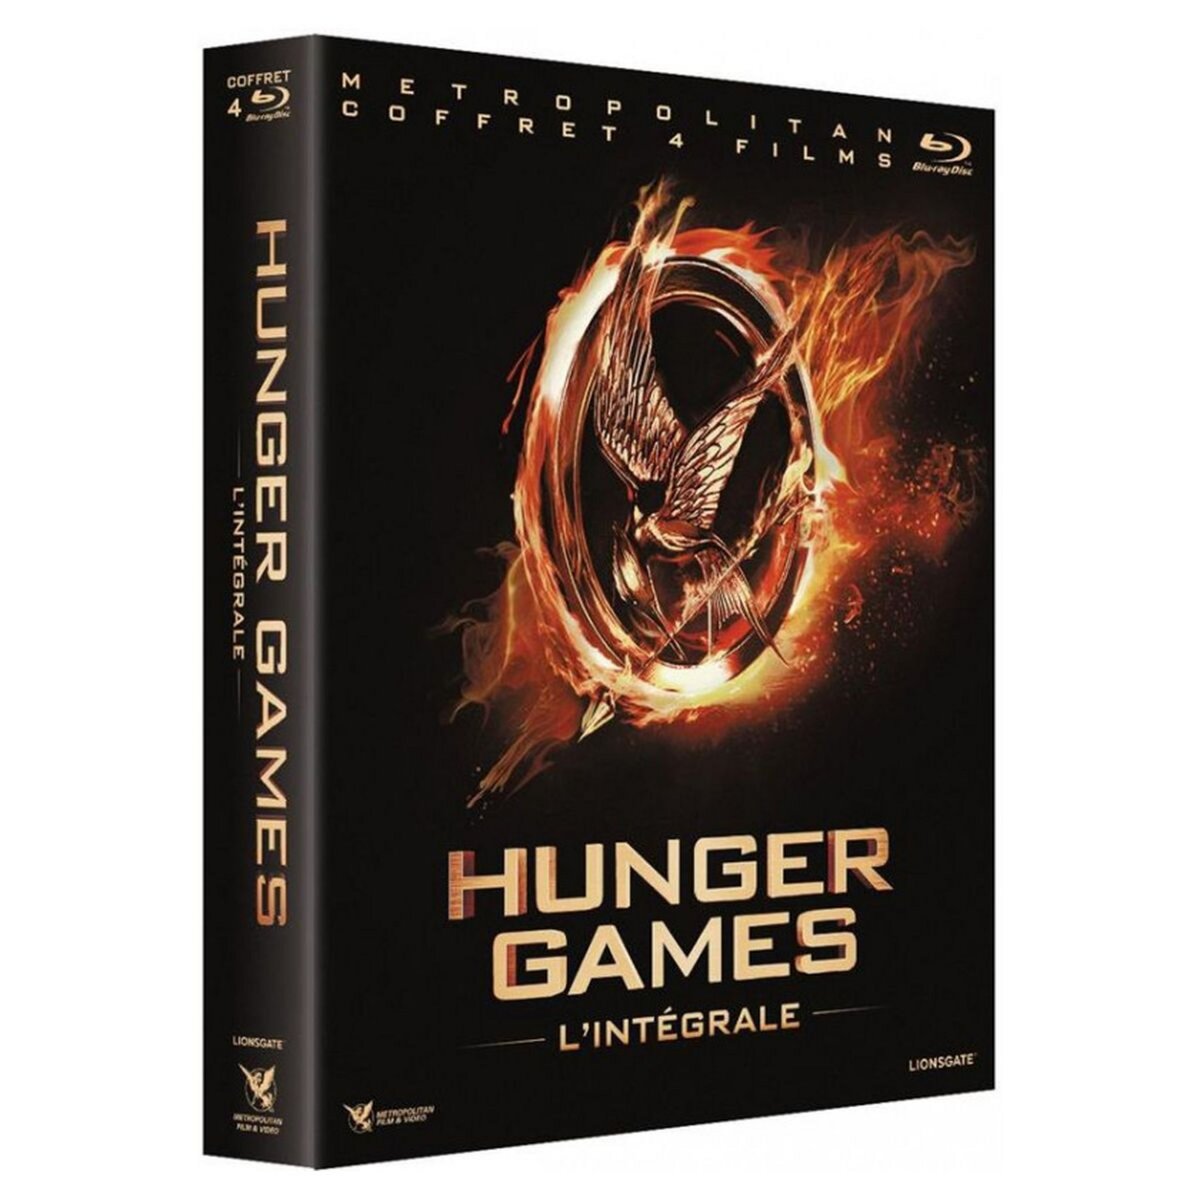 Coffret Blu-ray Hunger Games L'intégrale 4 films pas cher 